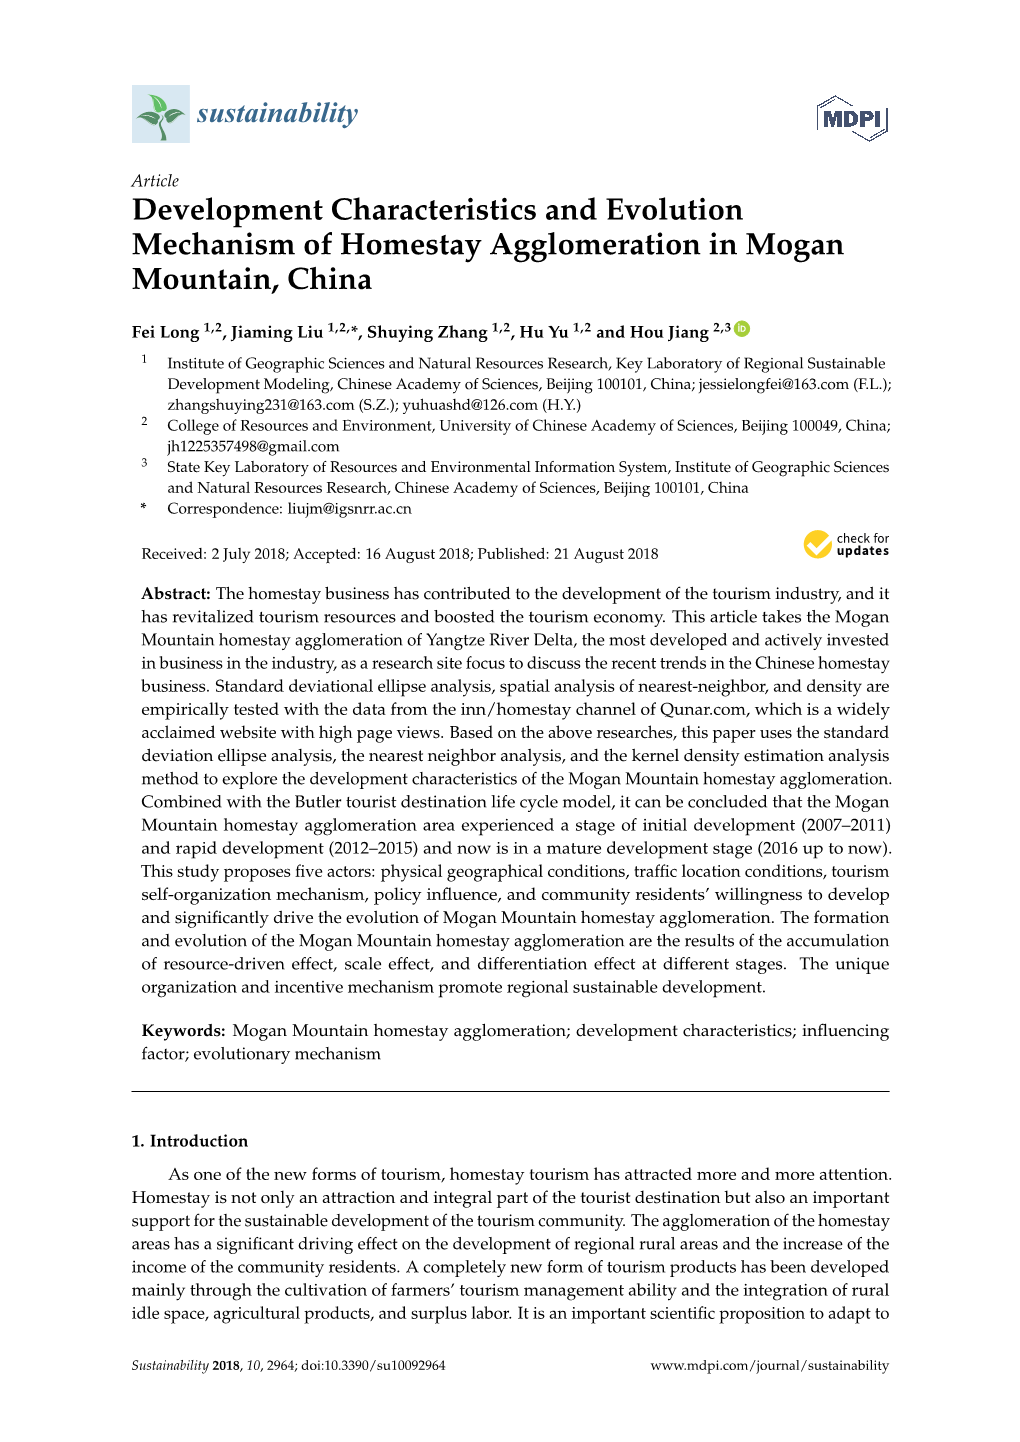 Development Characteristics and Evolution Mechanism of Homestay Agglomeration in Mogan Mountain, China